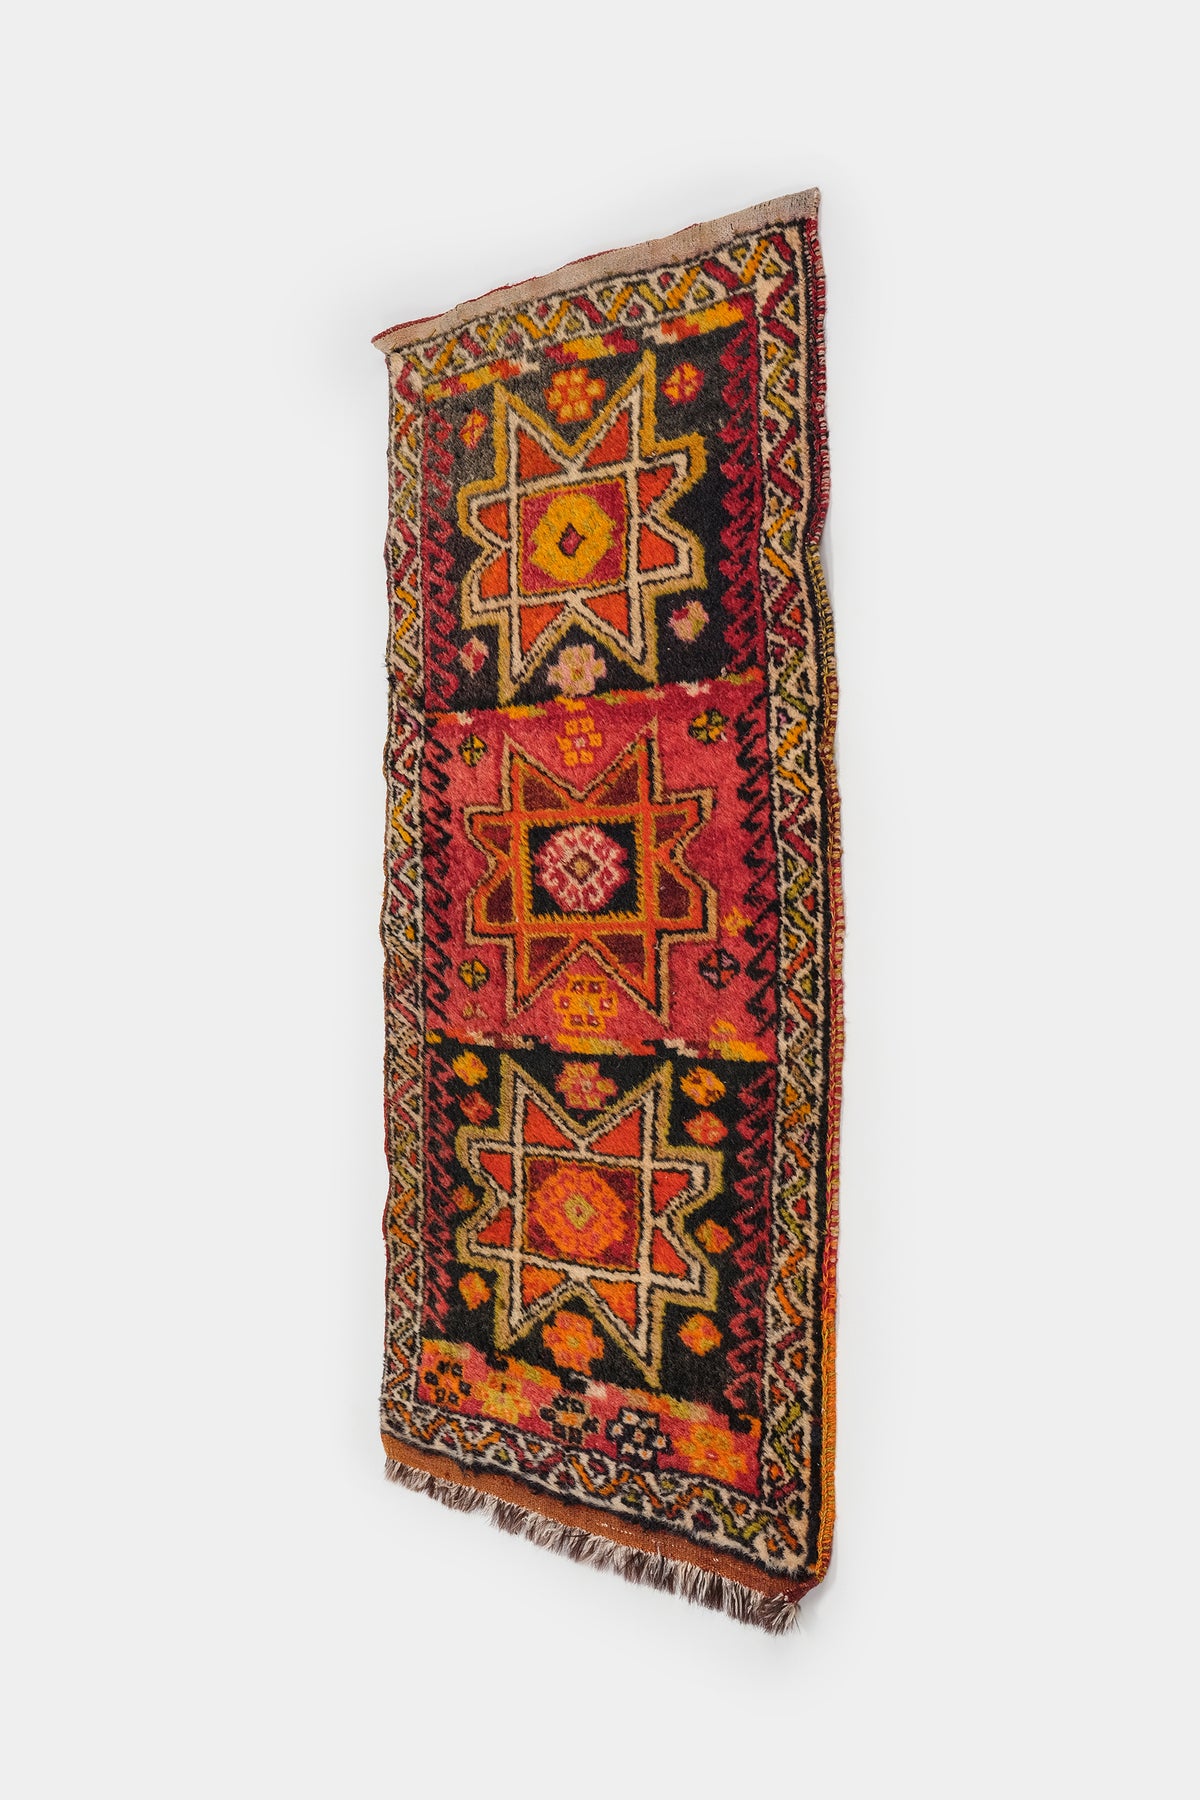 Small antique Atlas Carpet, Morocco, 30s